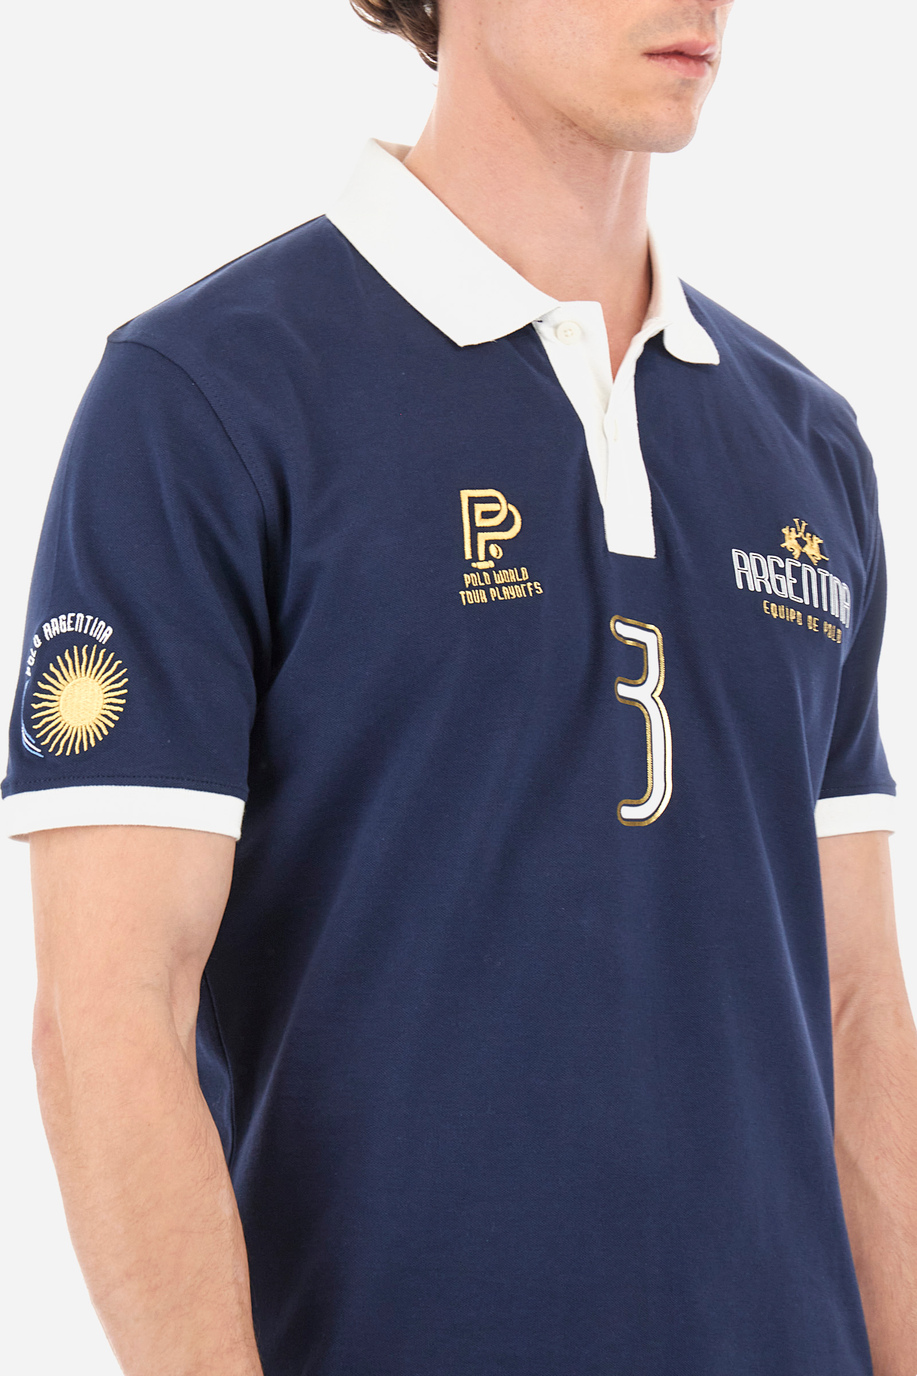 Polo regular fit in cotone elasticizzato - Ydan - Polo Shirts | La Martina - Official Online Shop